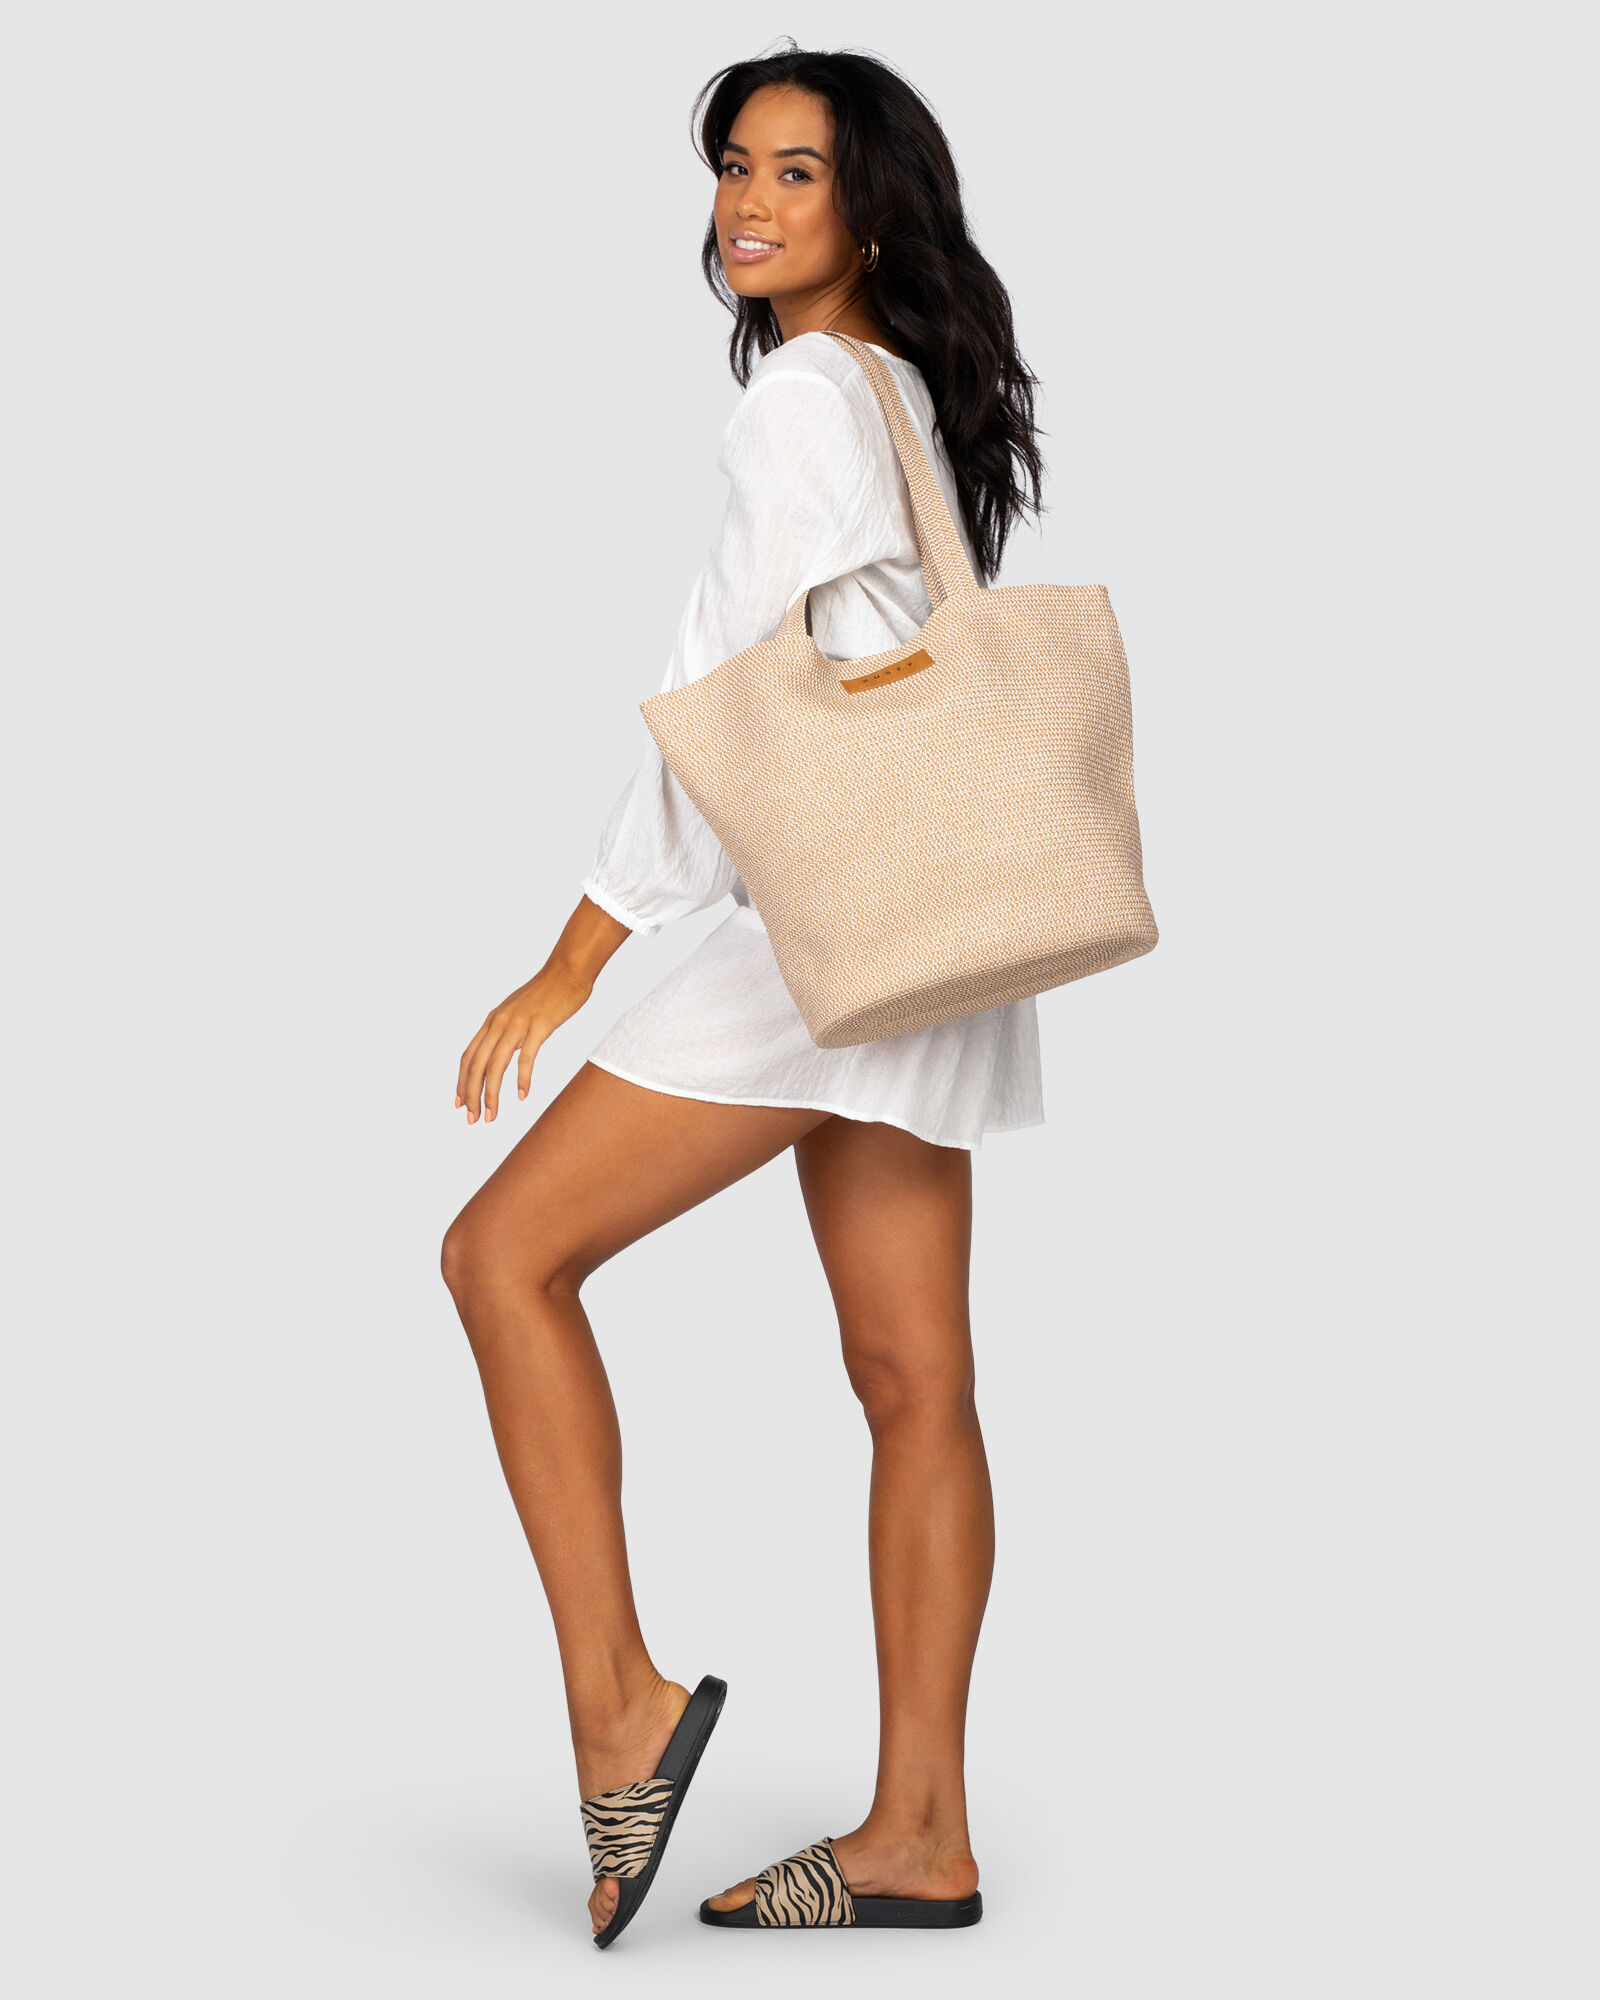 Serpui Marie Women's Gisele Wicker Bag, Light Honey, Tan, One Size: Handbags:  Amazon.com